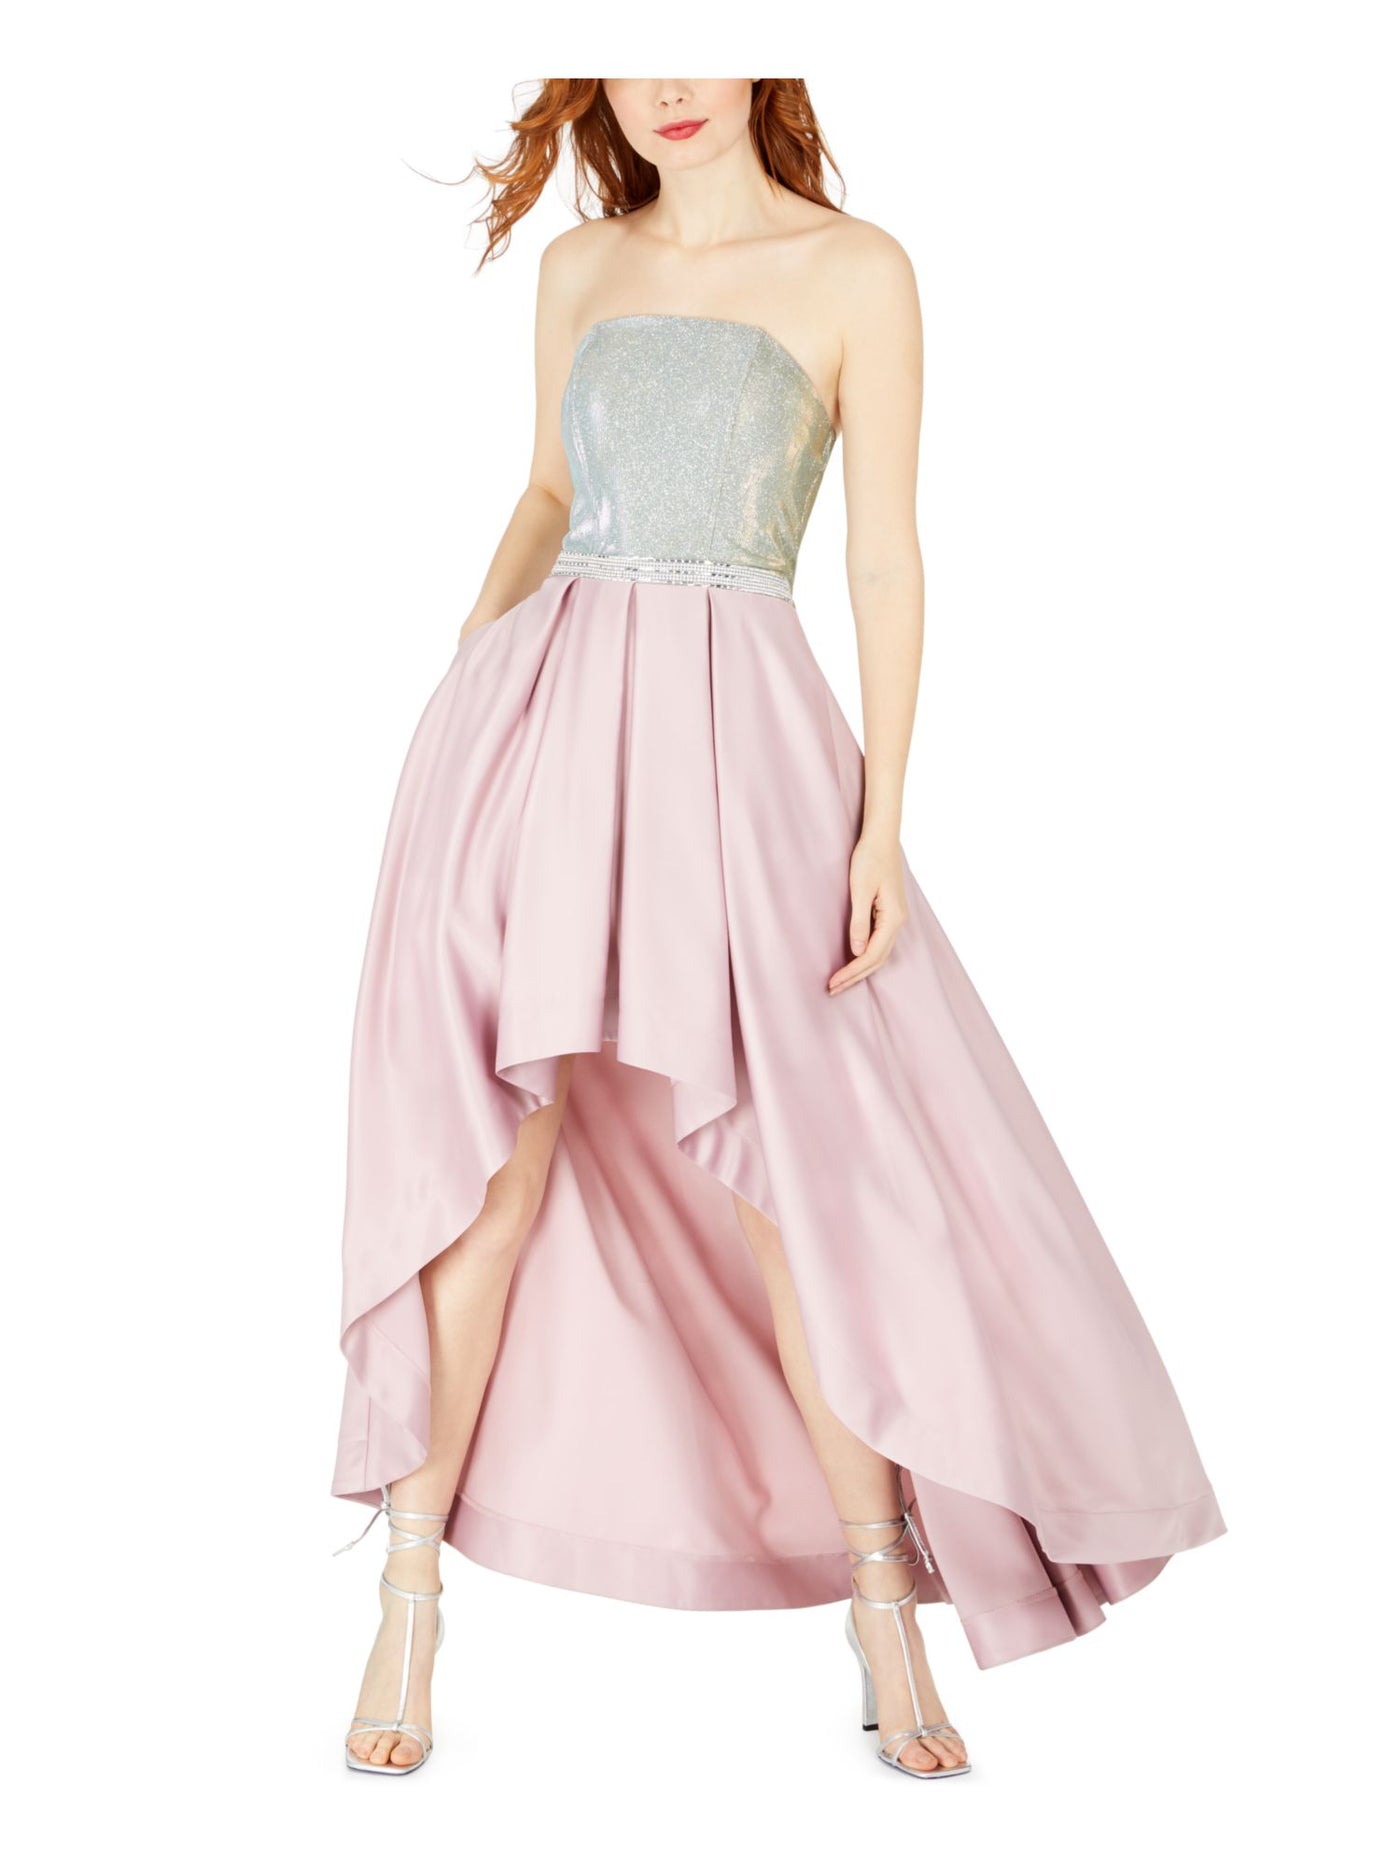 SPEECHLESS Womens Pink Rhinestone Patterned Sleeveless Strapless Full-Length  Hi-Lo Prom Dress Juniors 5